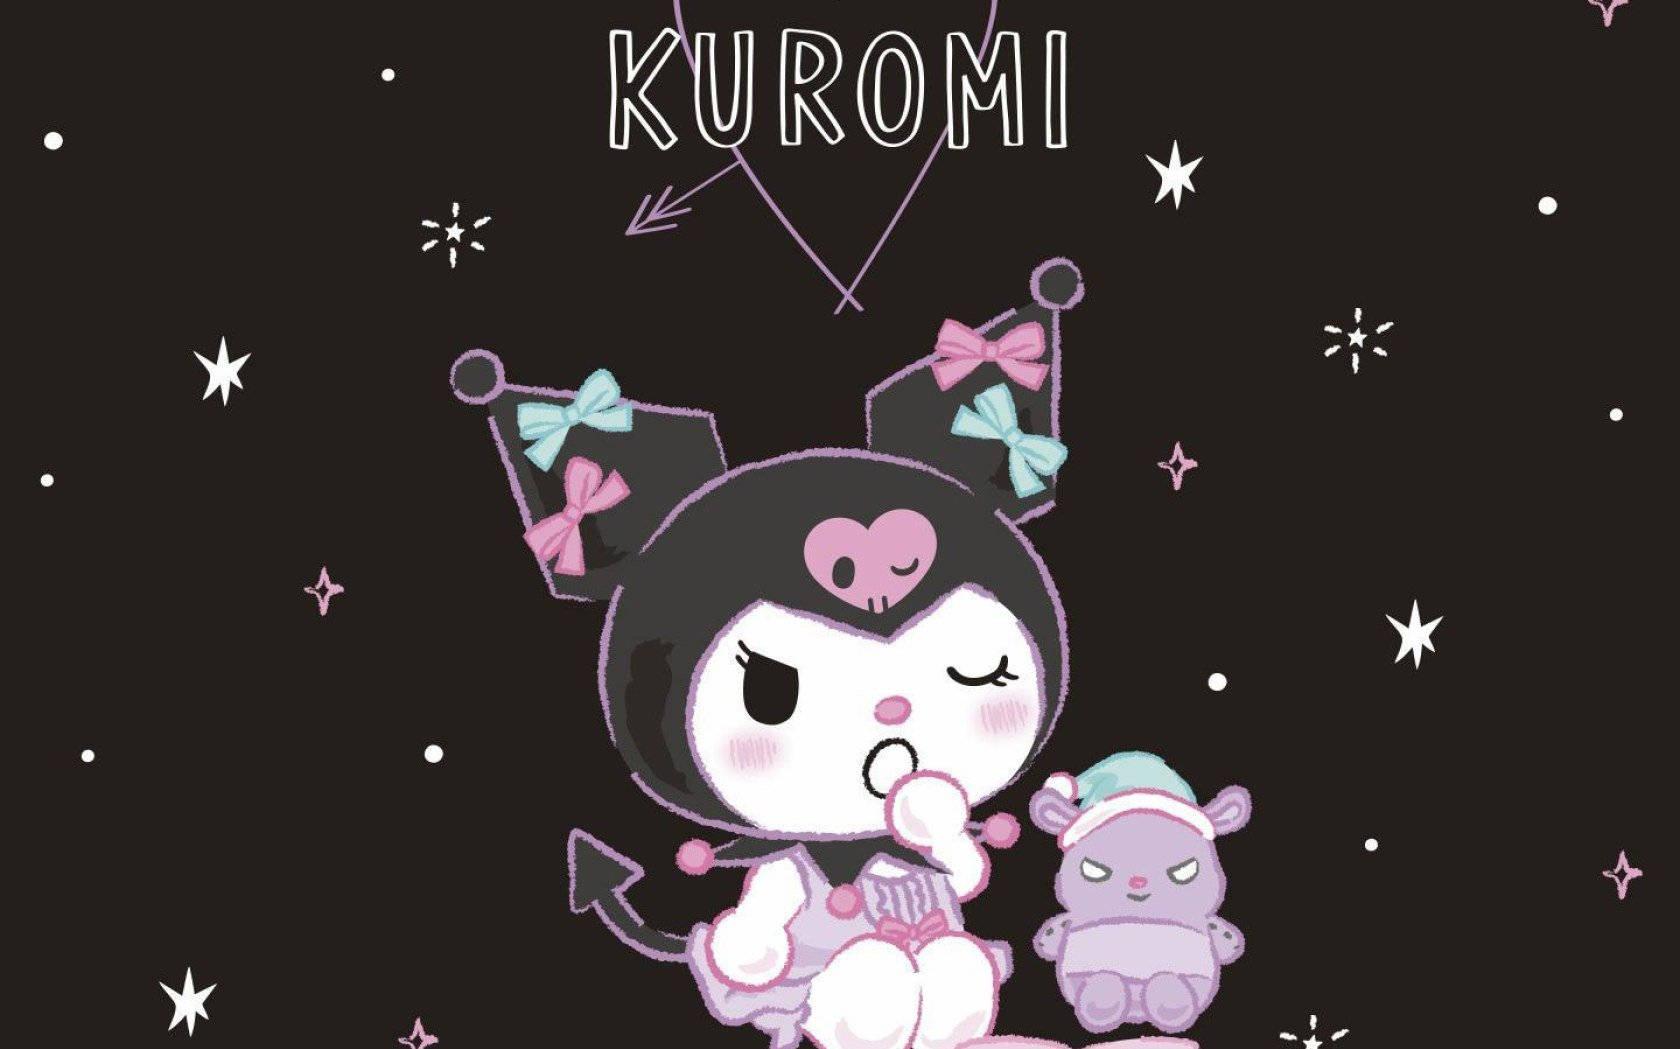 Free Kuromi Wallpaper Downloads [200] Kuromi Wallpapers for FREE